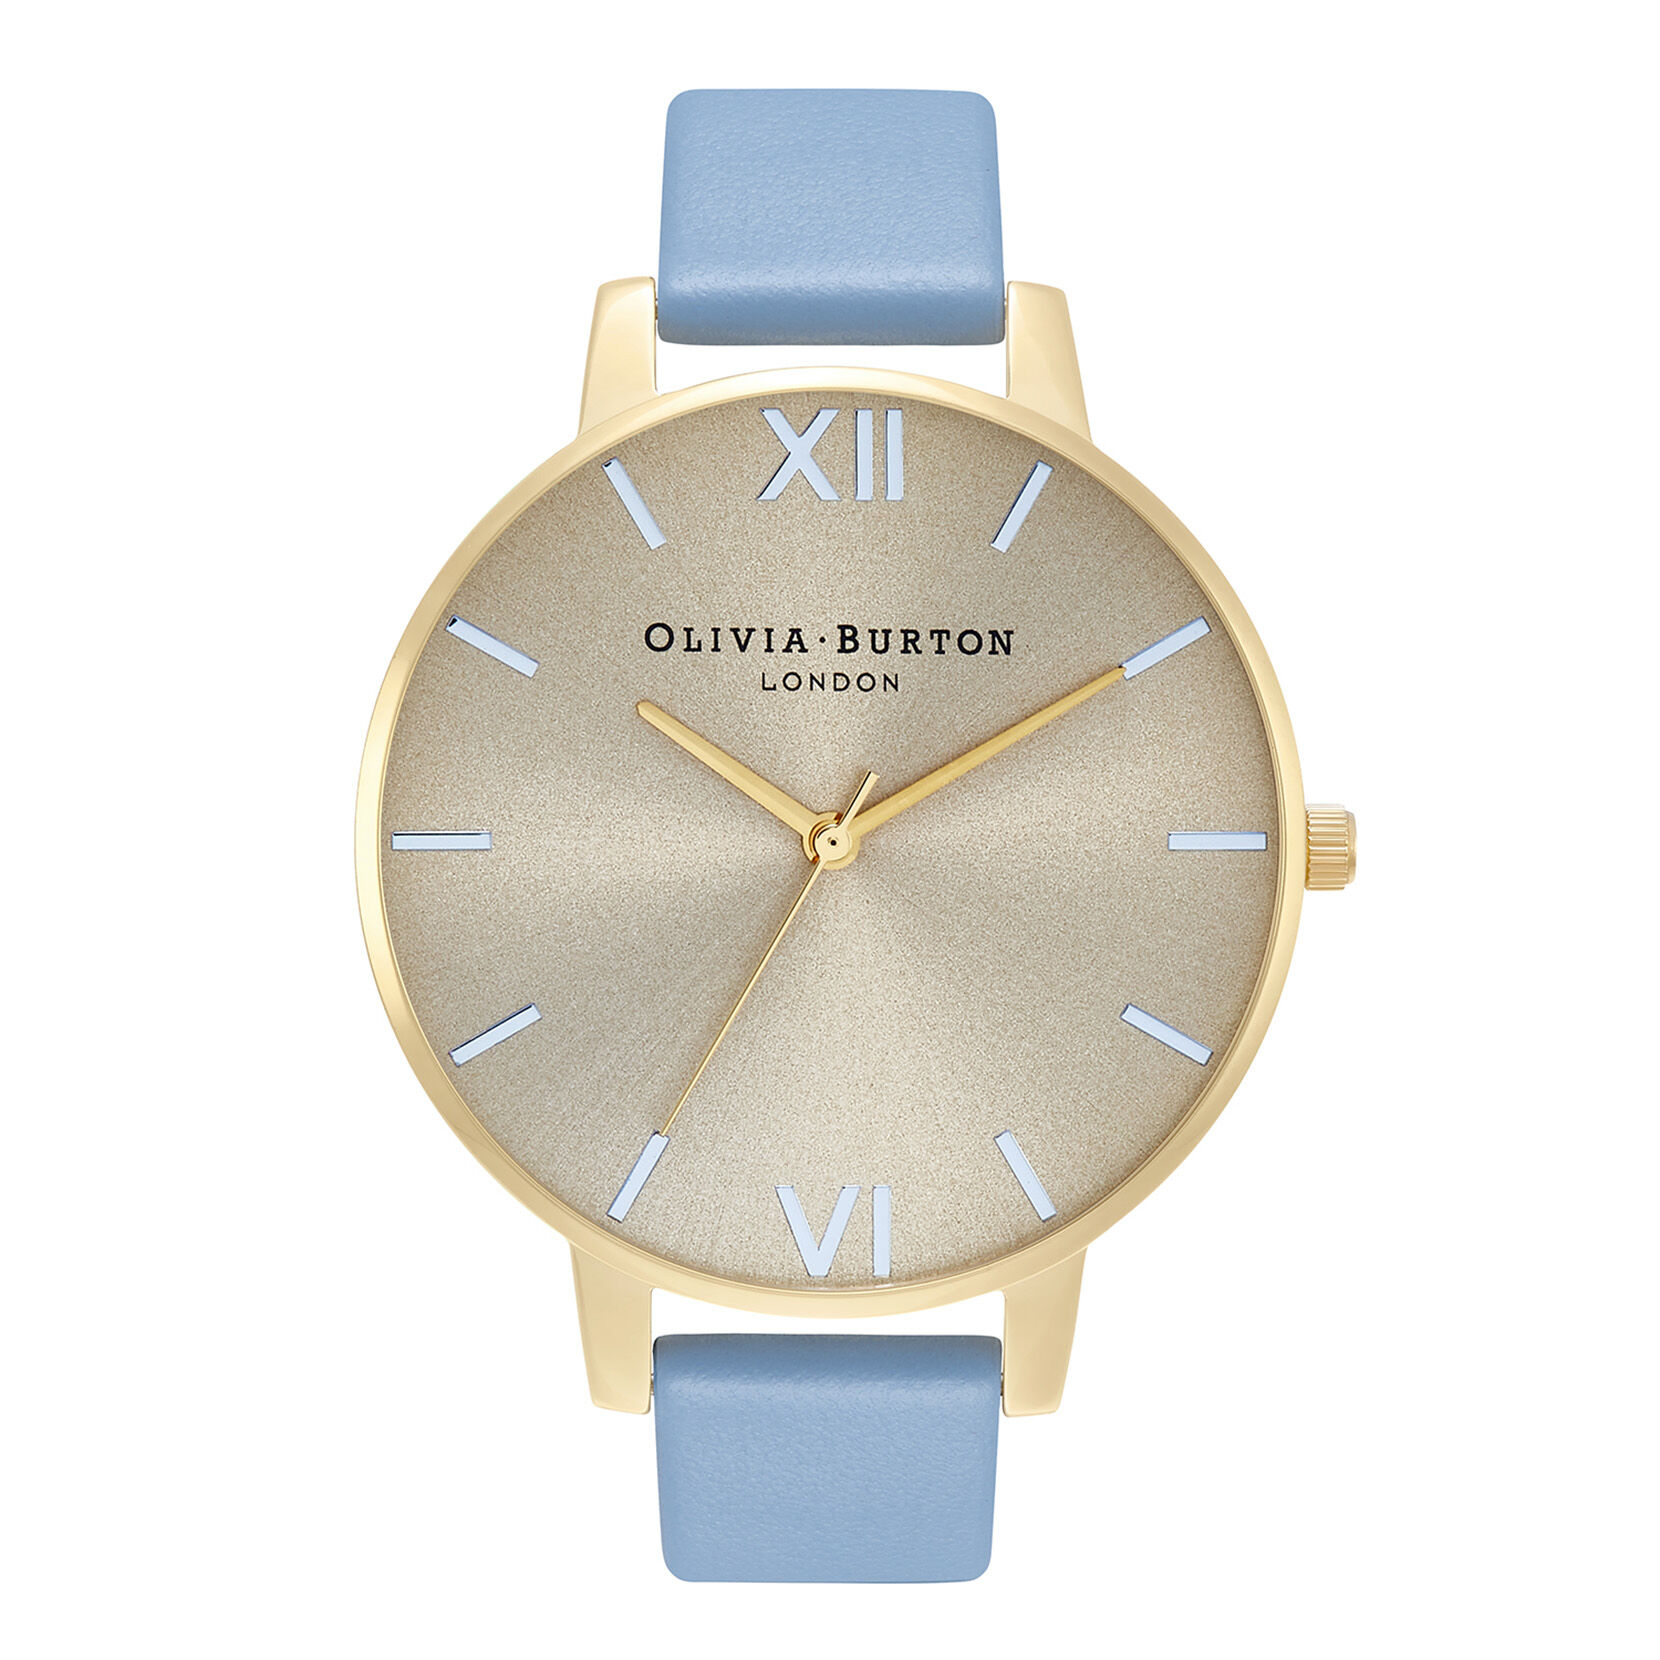 Olivia Burton | Shop all watches